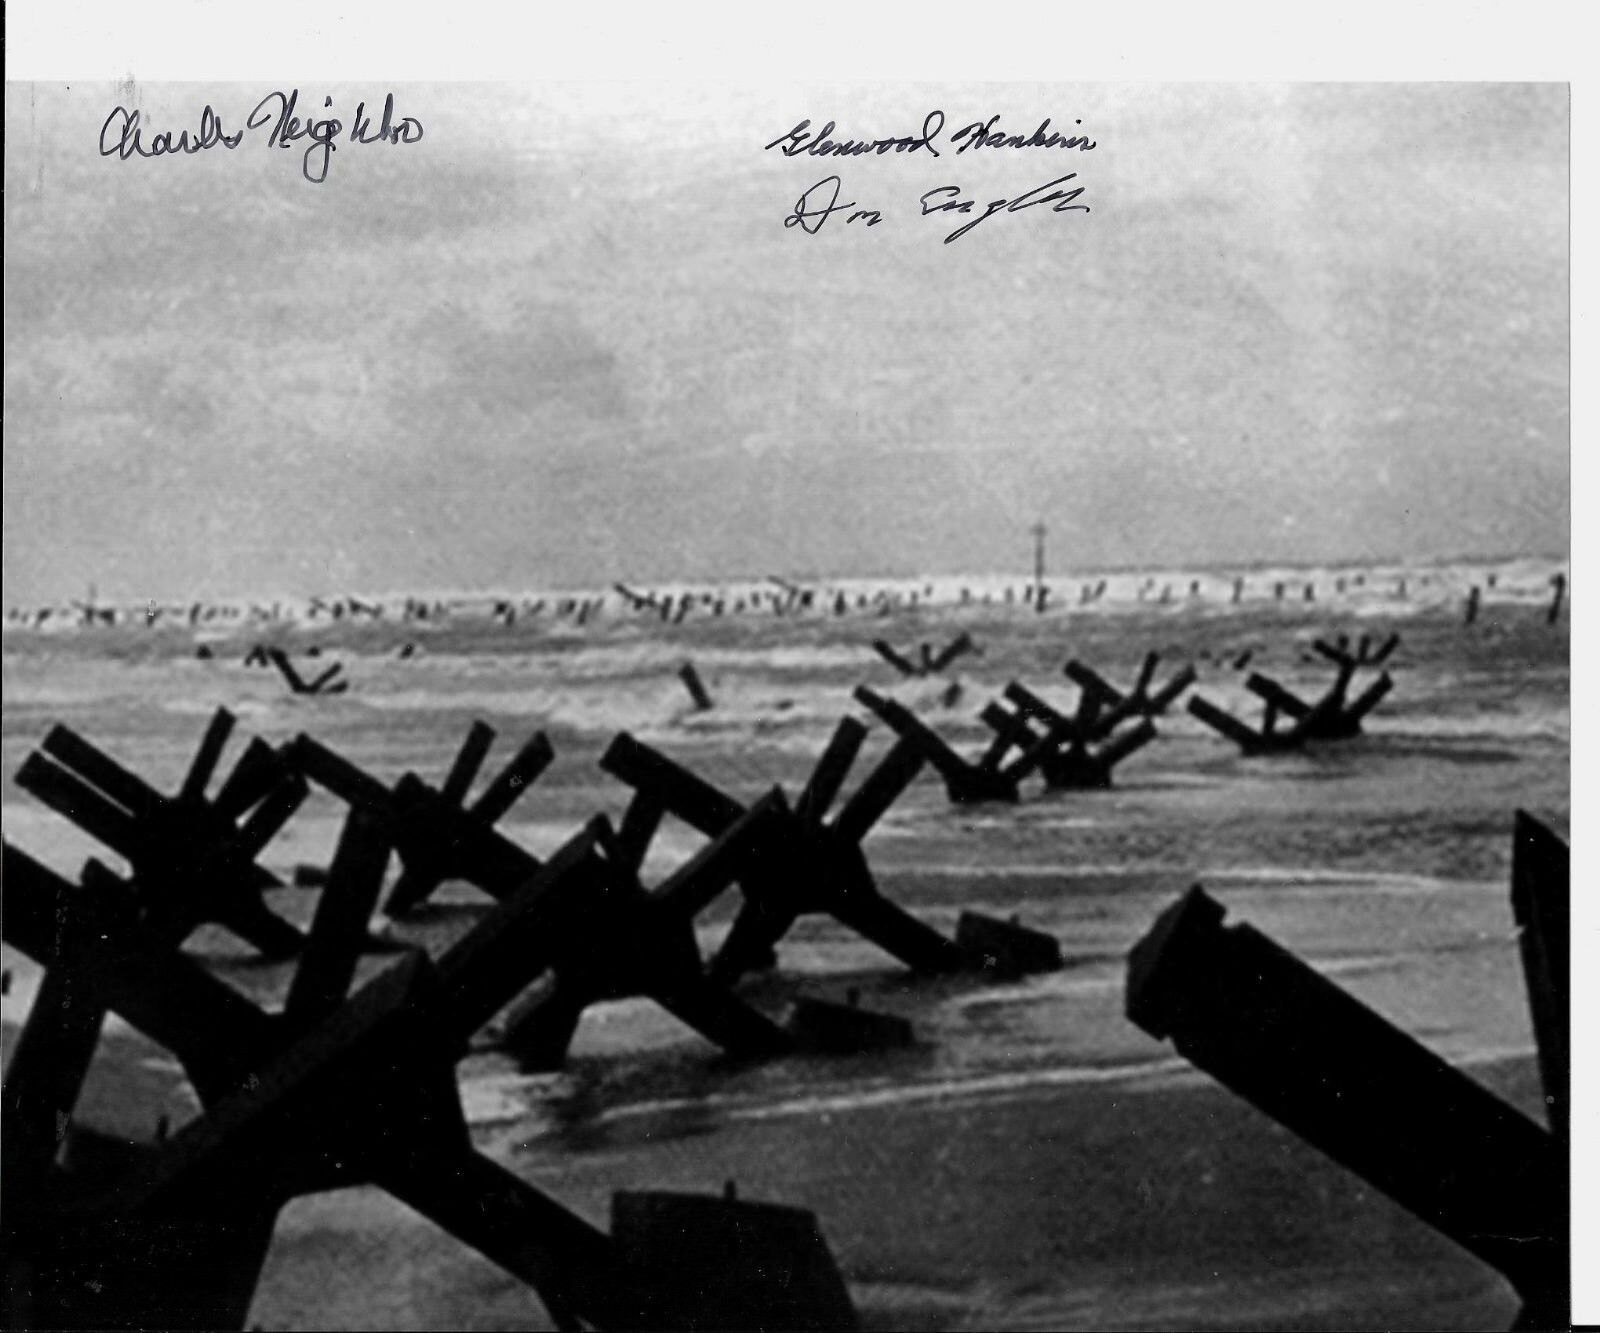 D-DAYJUNE 6,1944 OMAHA BEACH LANDING 3 D-DAY VETERANS RARE MULTI SIGNED Photo Poster painting